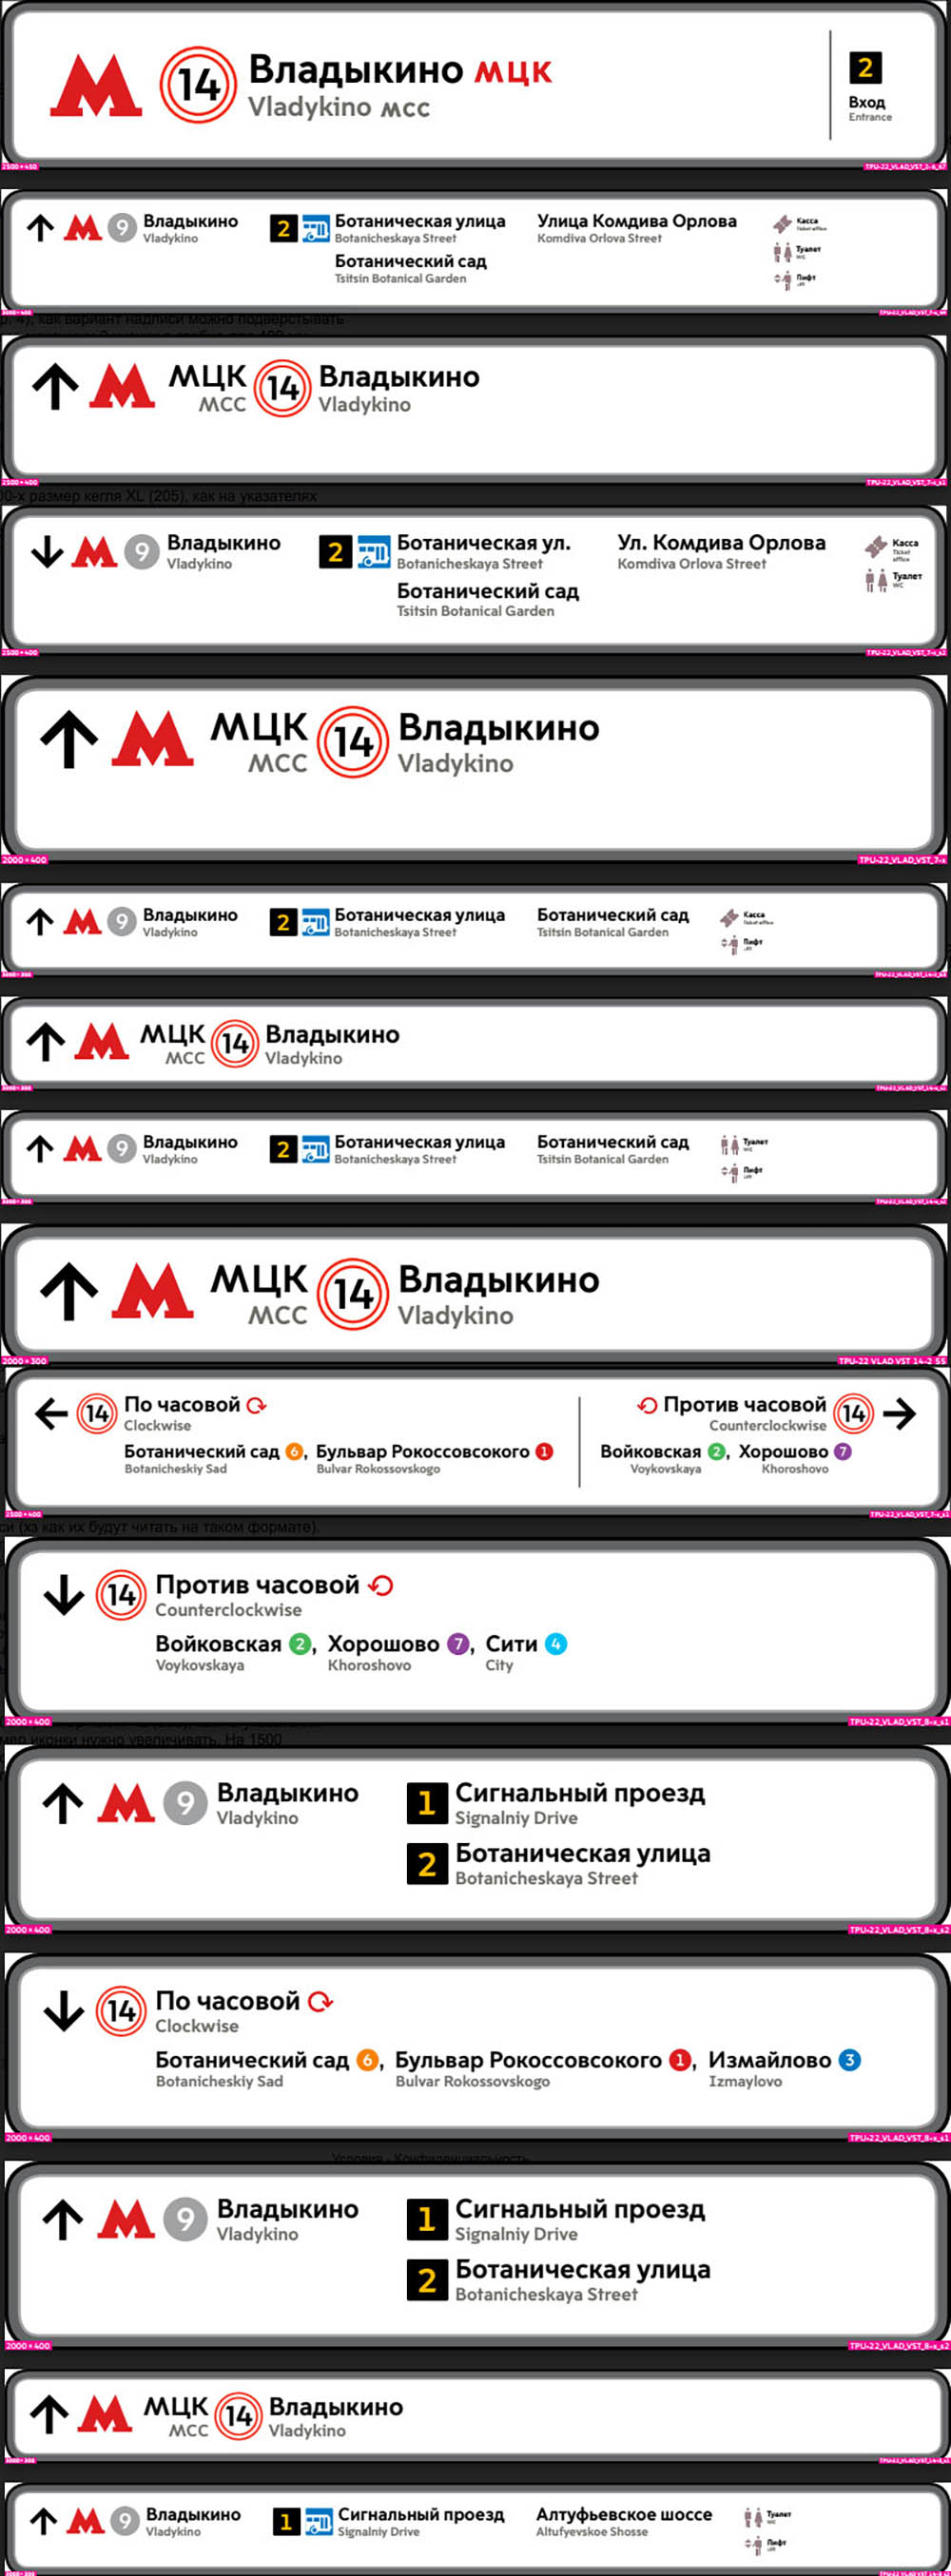 metro mcc navigation process 7 03